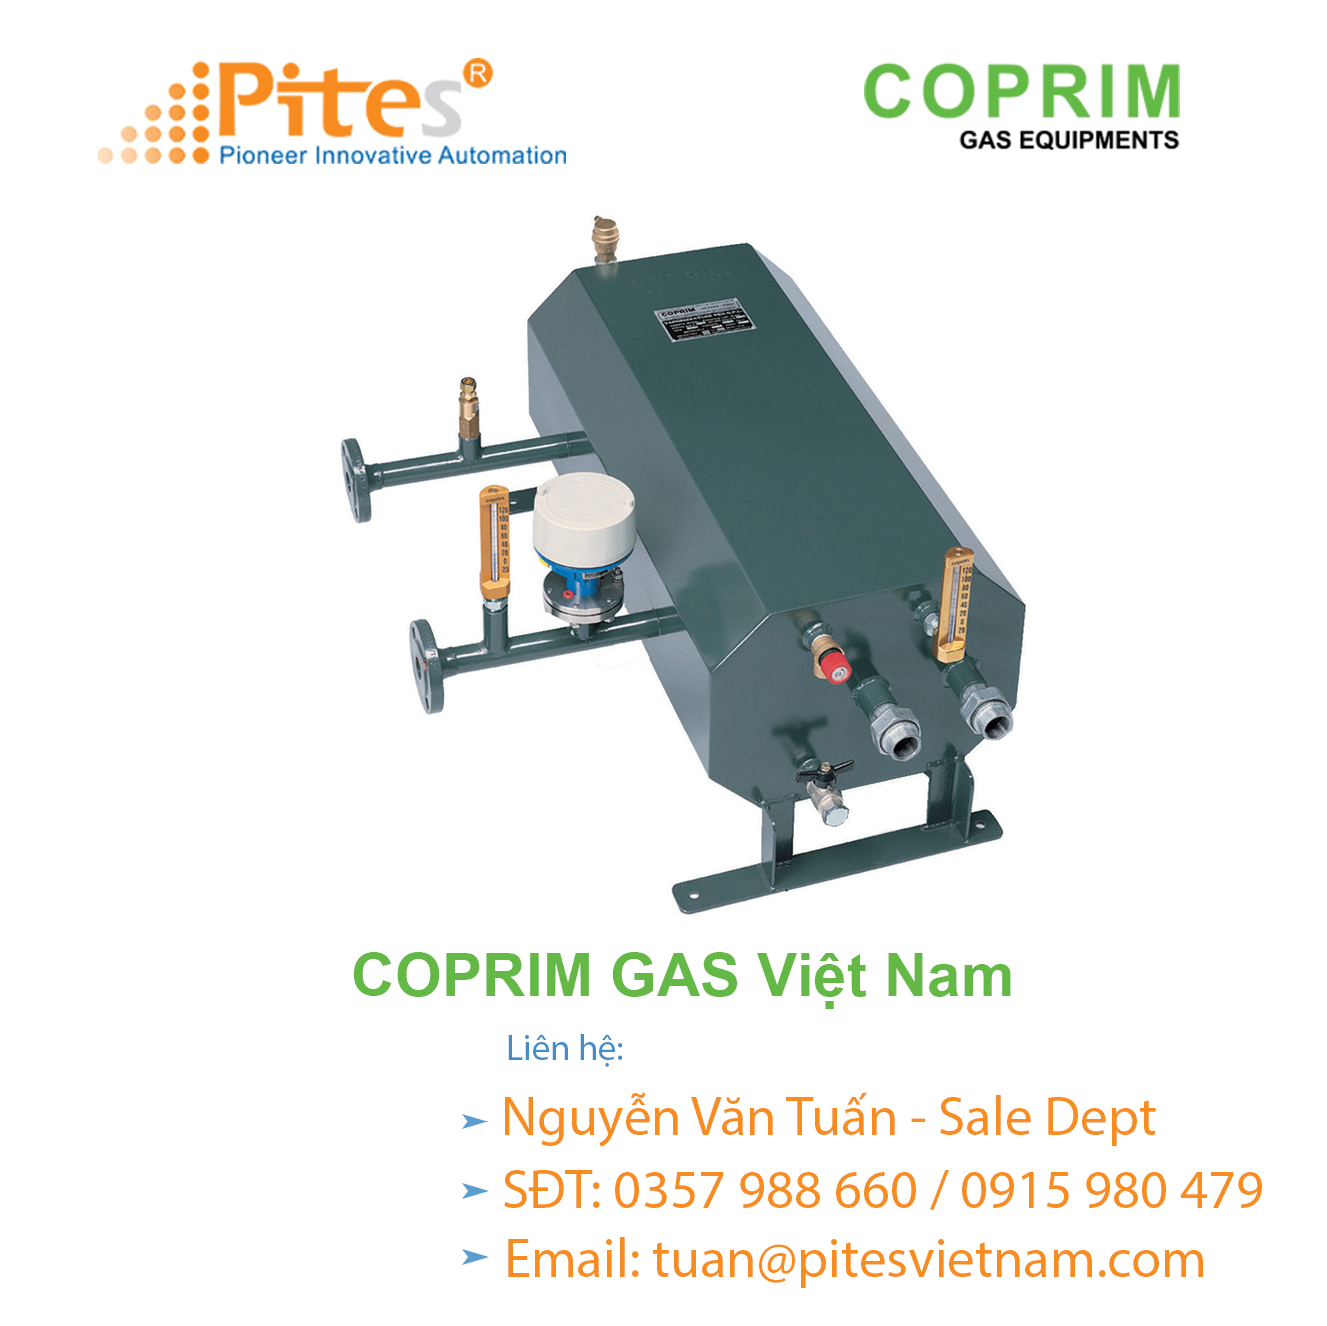 coprim-gas-vietnam-coprim-gas-viet-nam-dai-ly-coprim-gas-list-code-coprim-gas-part-10.png